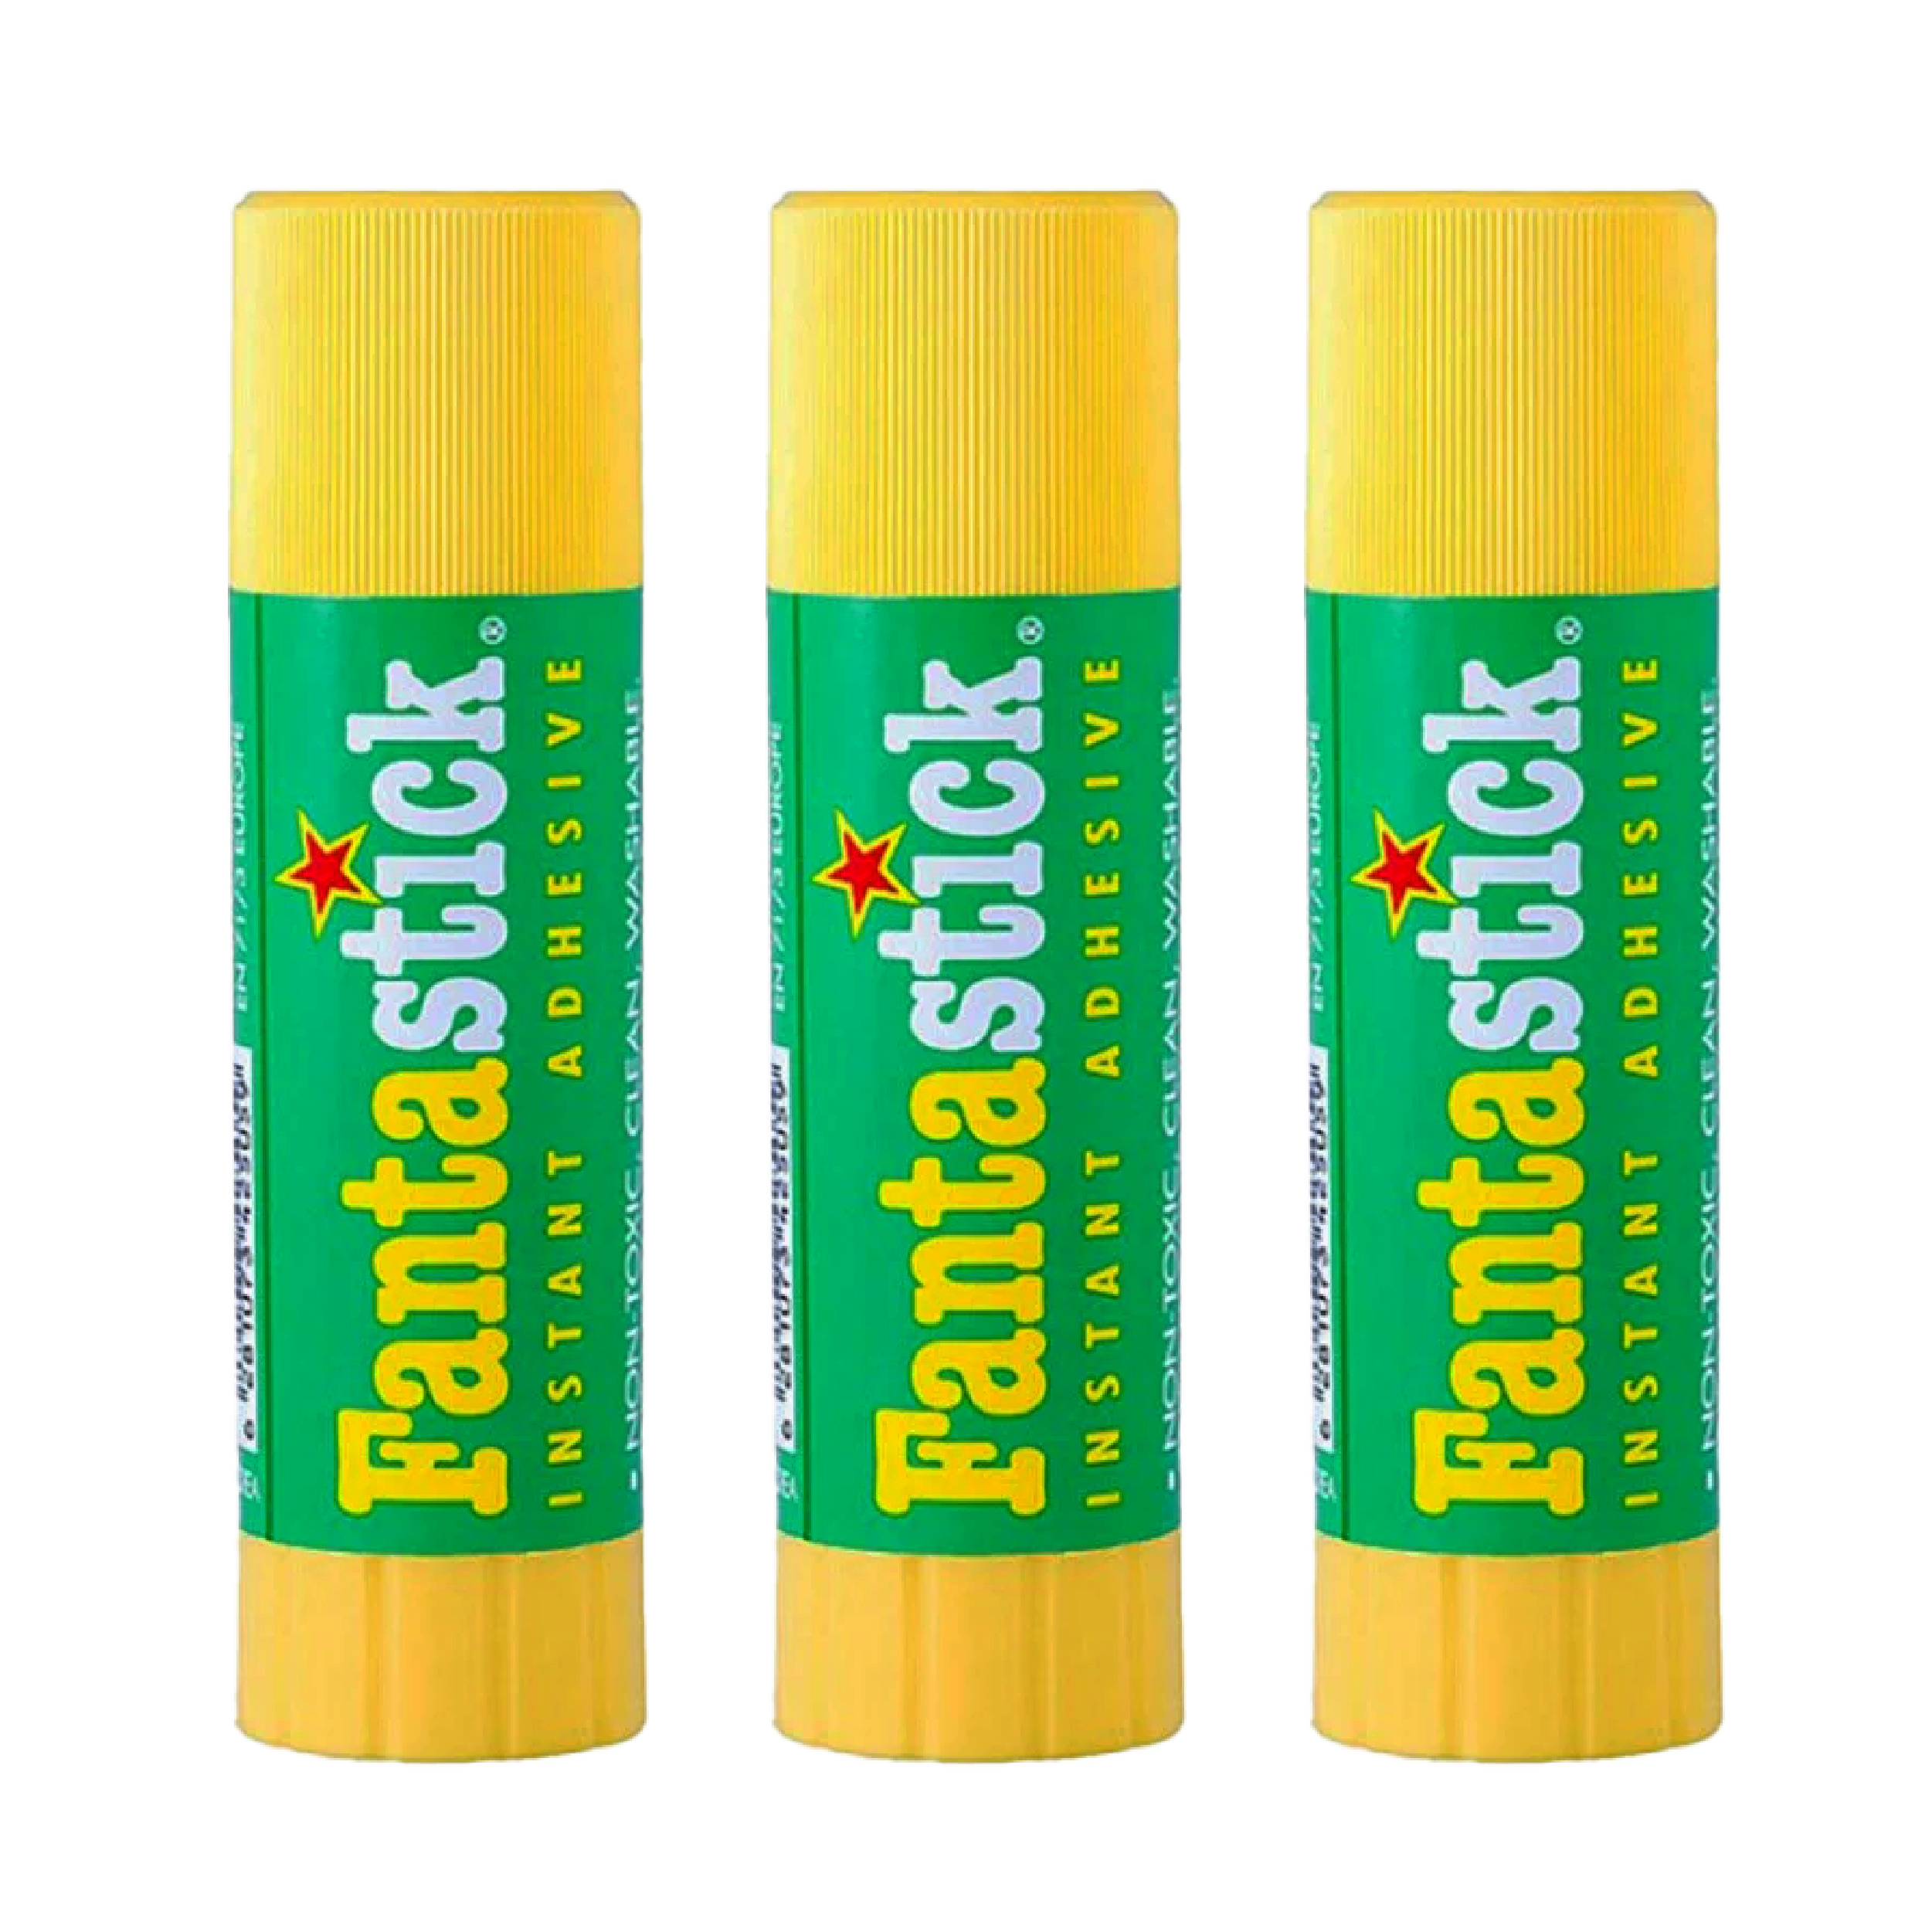 Fantastick Glue Stick, 35g (FK-G35S)